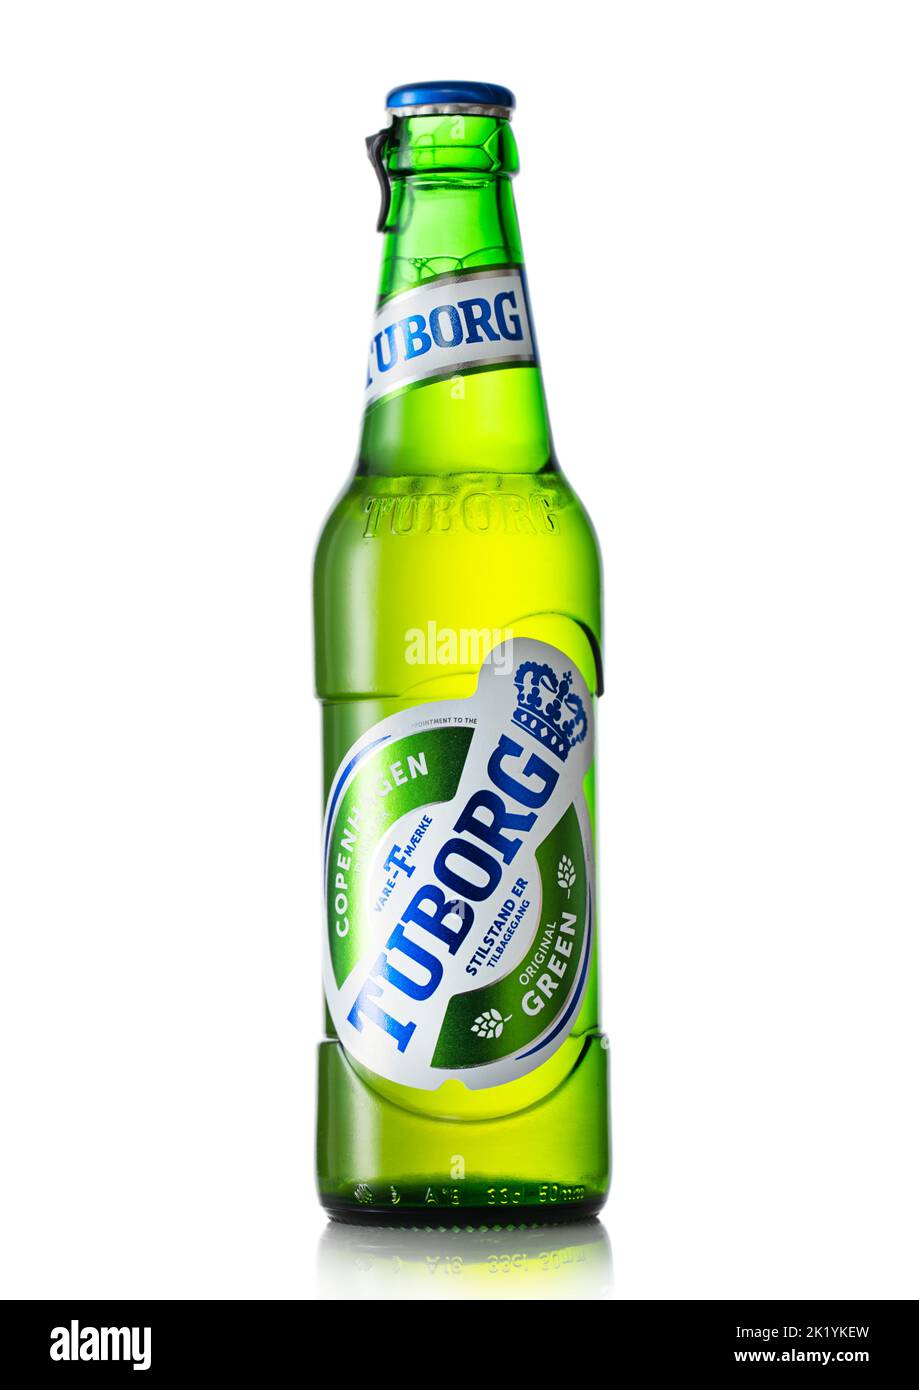 LONDON, UK - JULY 01, 2022: Bottle of Tuborg lager beer on white background. Stock Photo